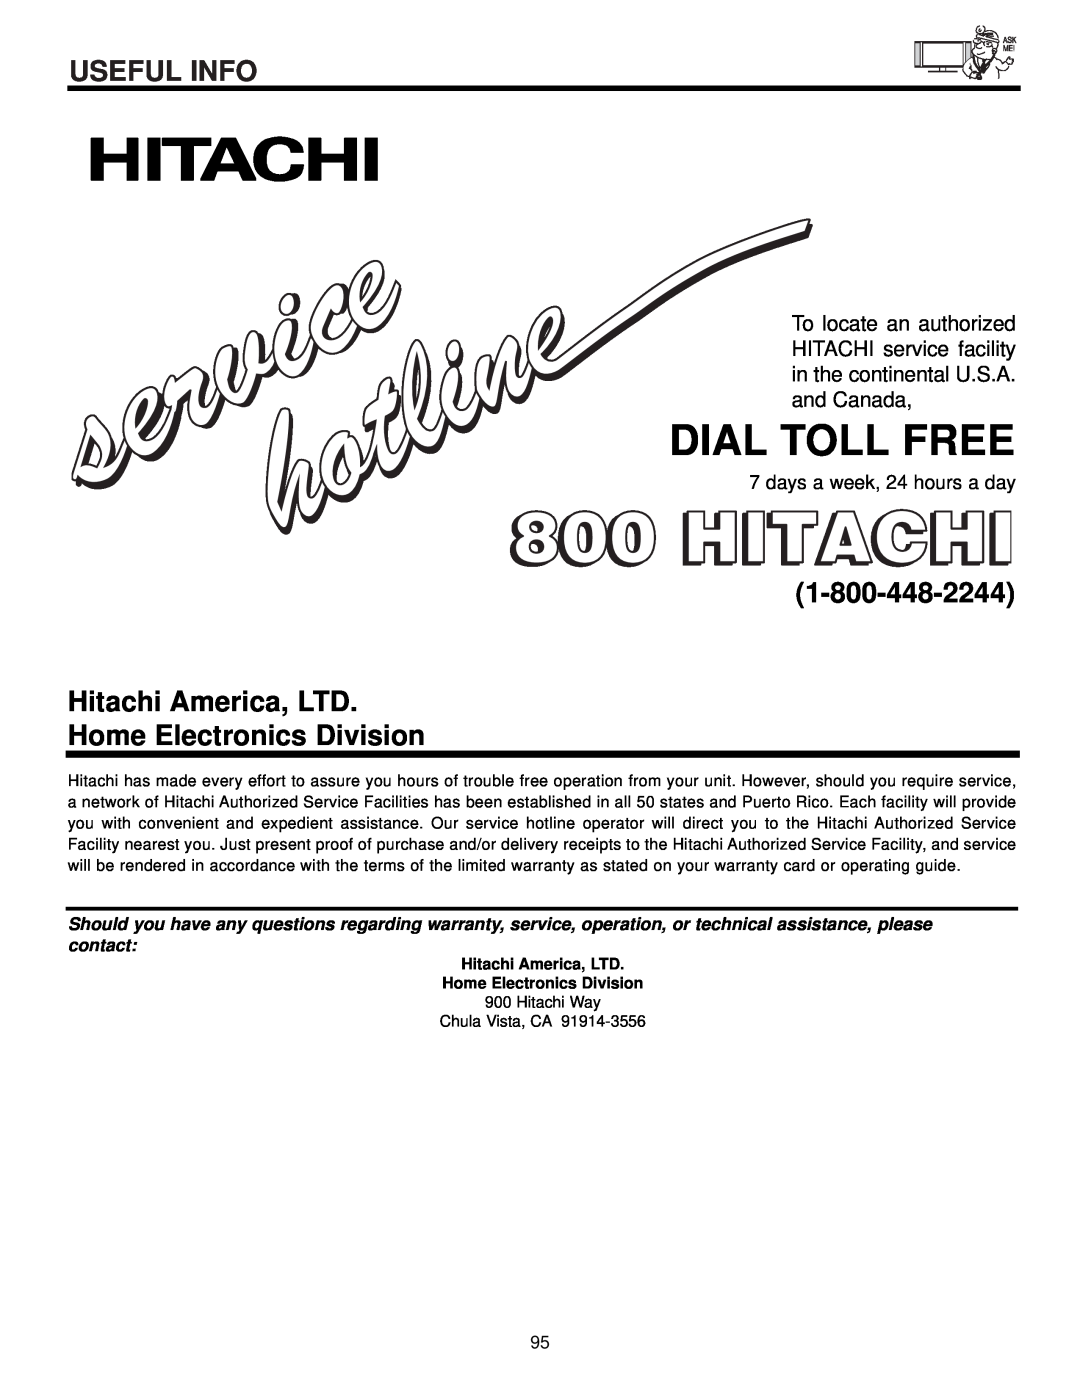 Hitachi 42HDX61, 55HDX61 Hitachi America, LTD, Home Electronics Division, Dial Toll Free, Useful Info 